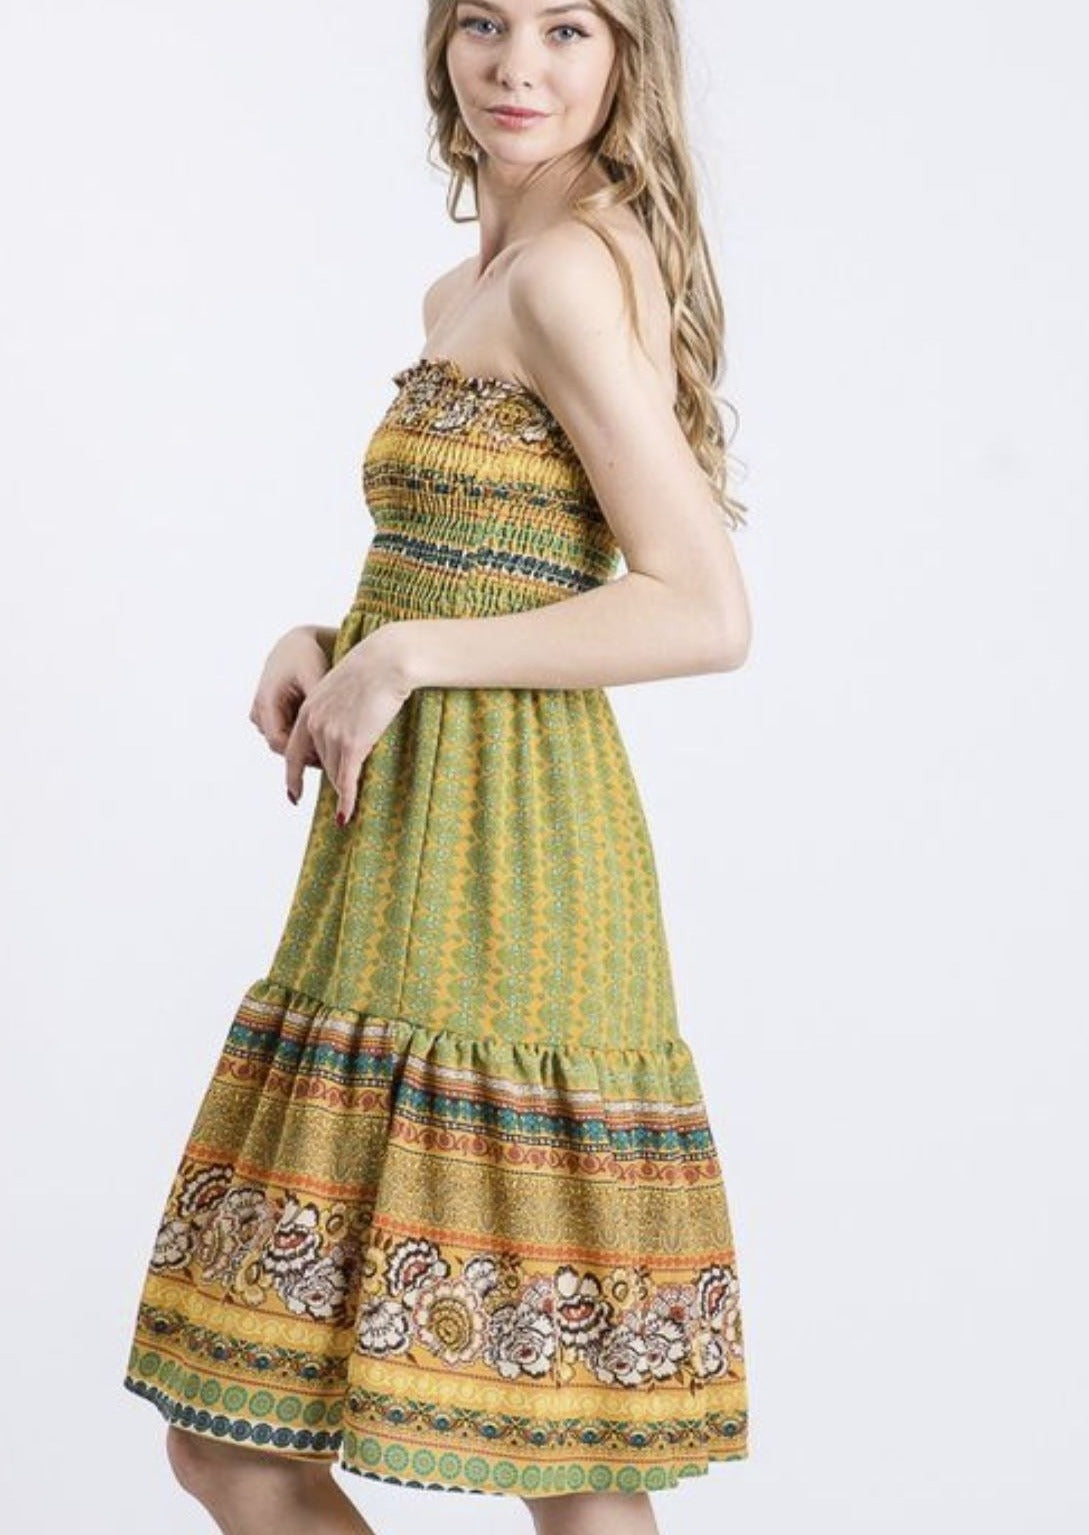 Sunset Shades Strapless Bohemian Print Dress or Maxi Skirt - Clearance Final Sale